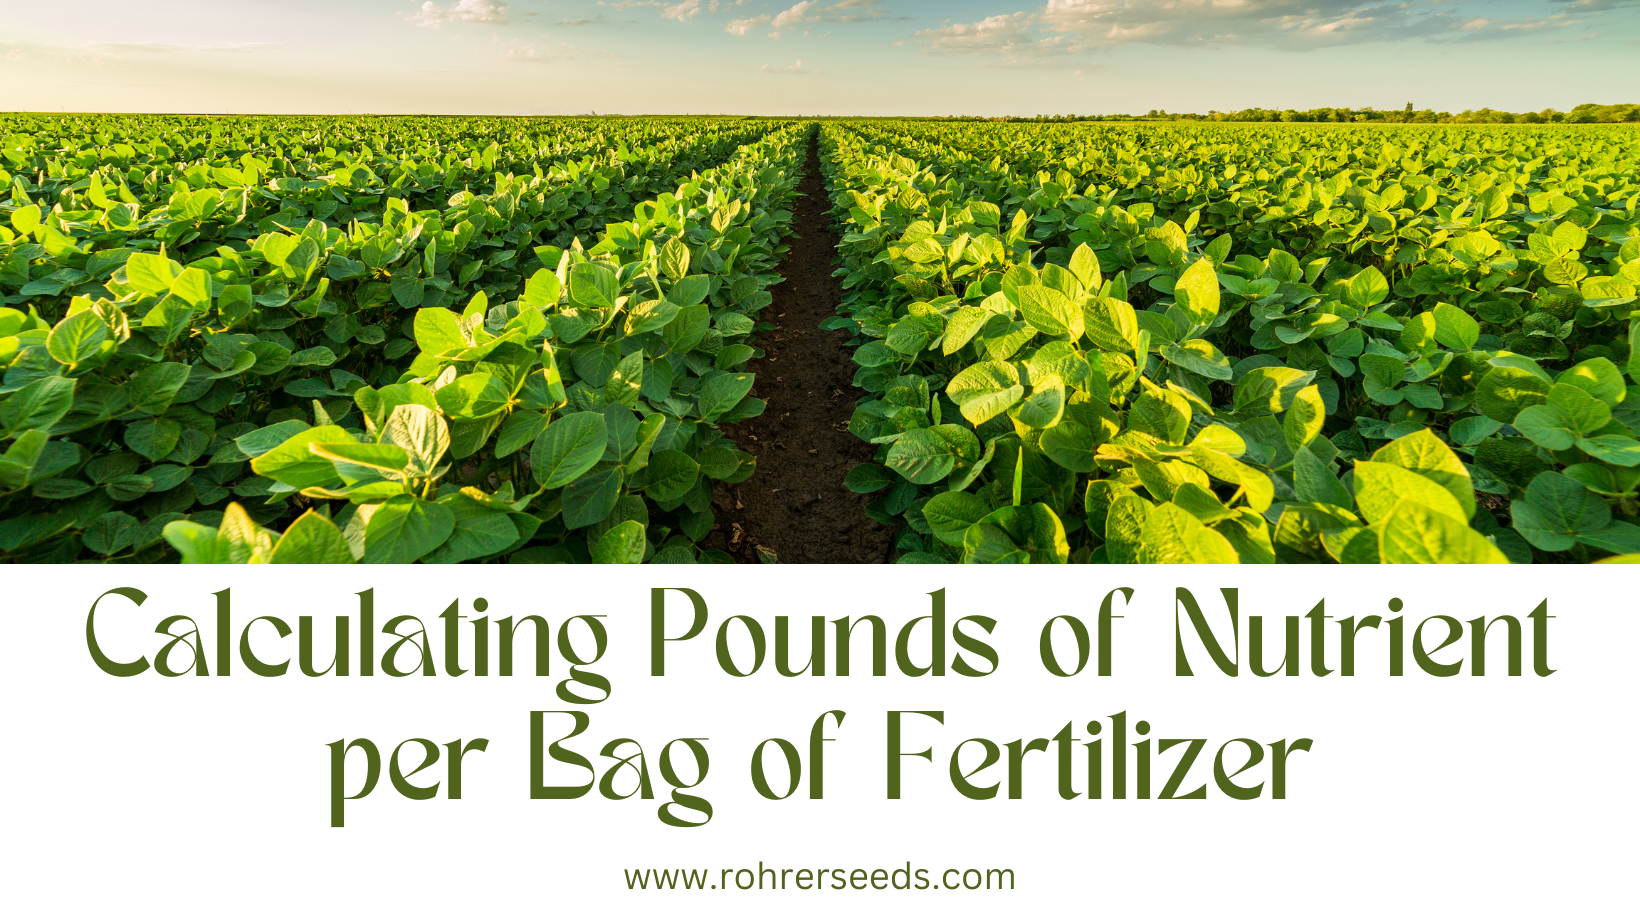 Calculating Pounds of Nutrient per Bag of Fertilizer